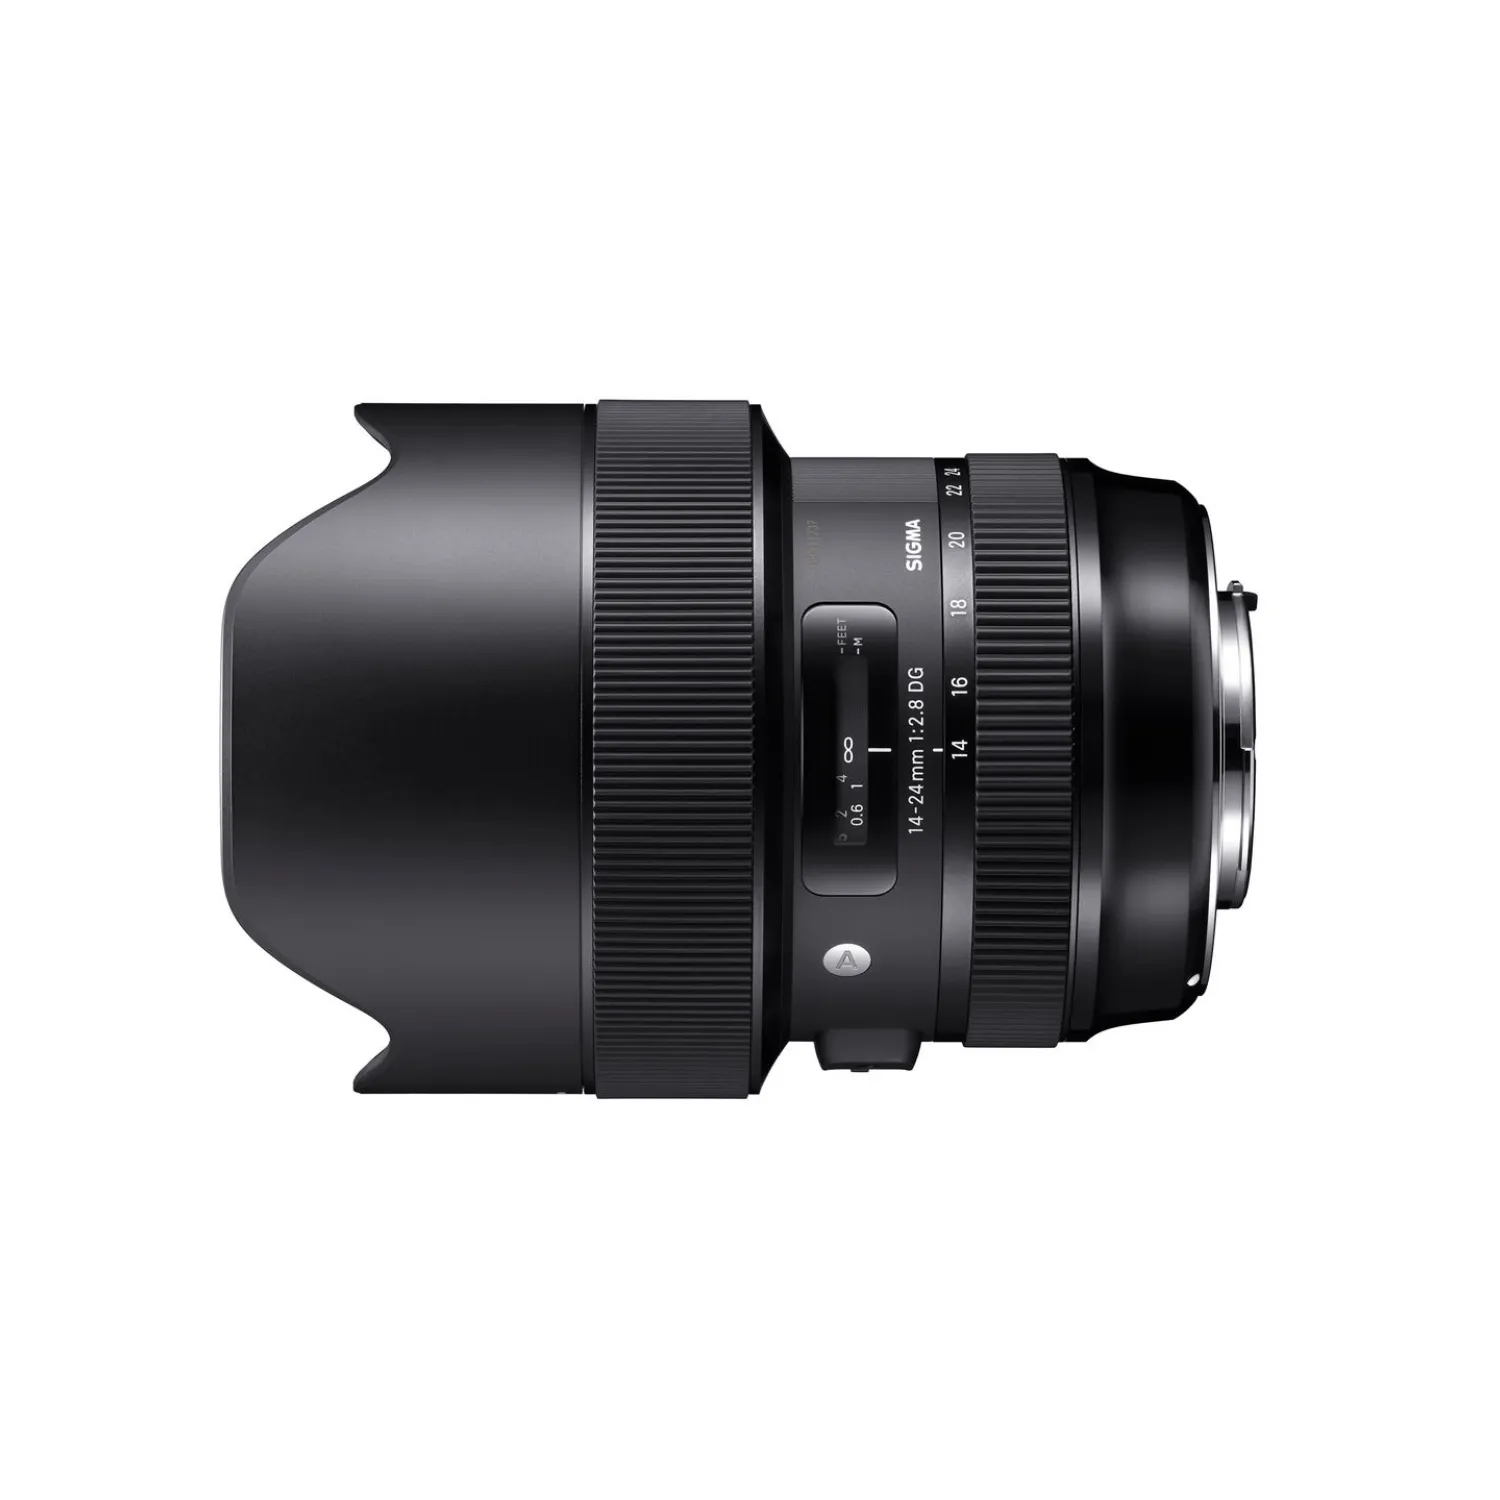 Sigma 14-24mm f/2.8 DG HSM Art Lens for Canon